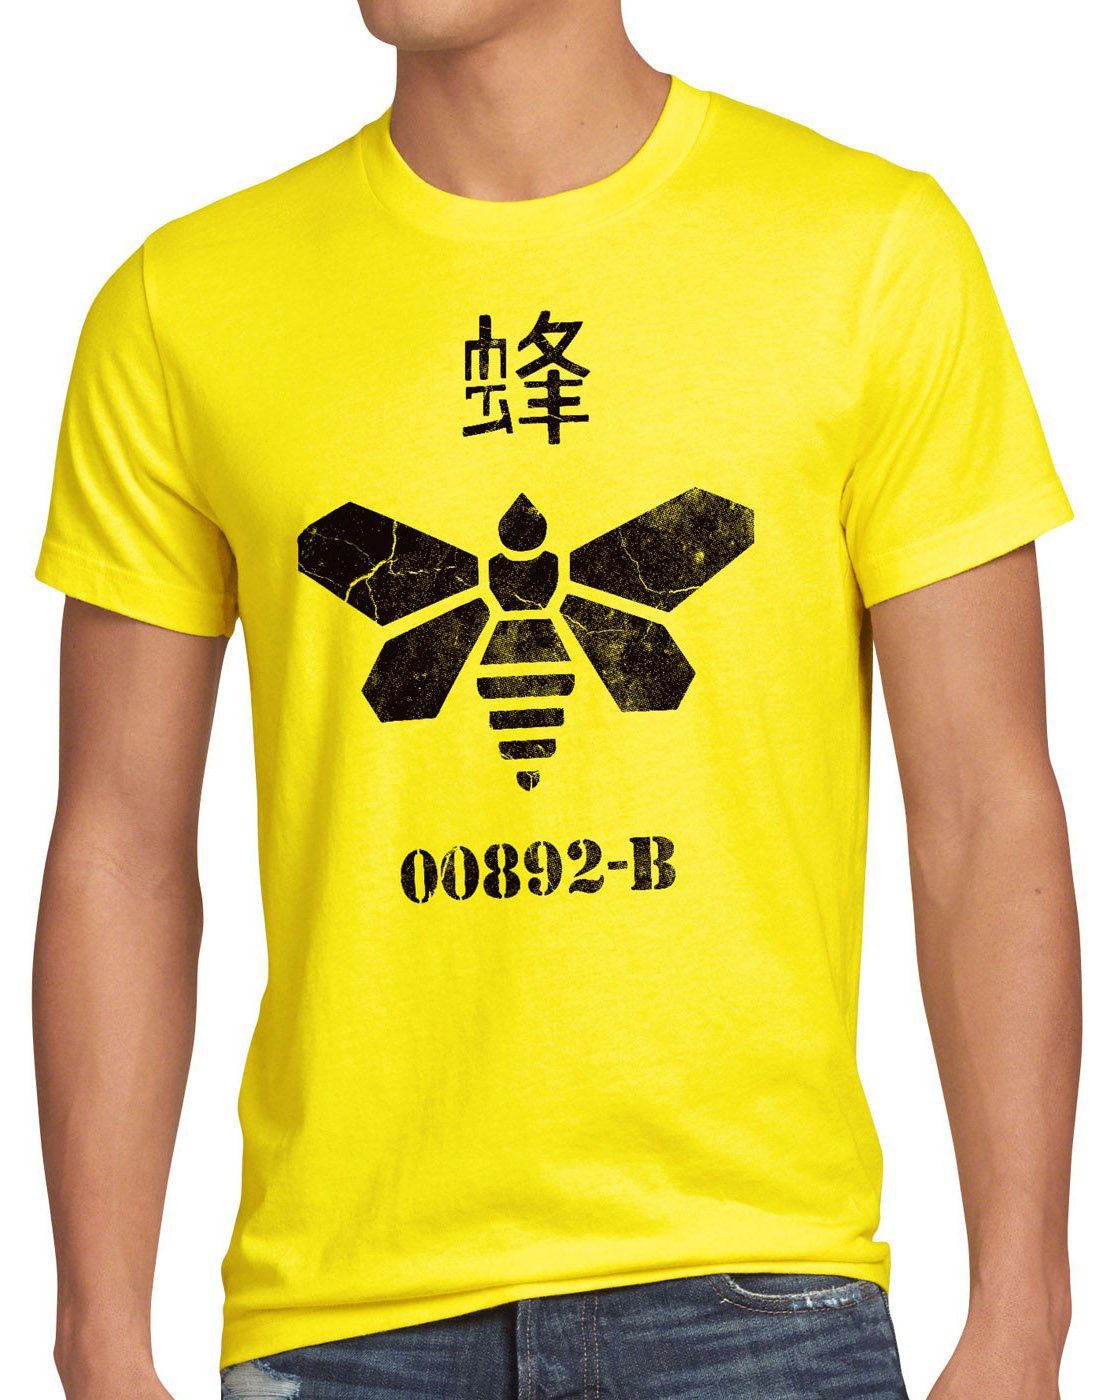 style3 Print-Shirt Herren Moth bad chemie gelb biene Chemical breaking Golden walter T-Shirt heisenberg